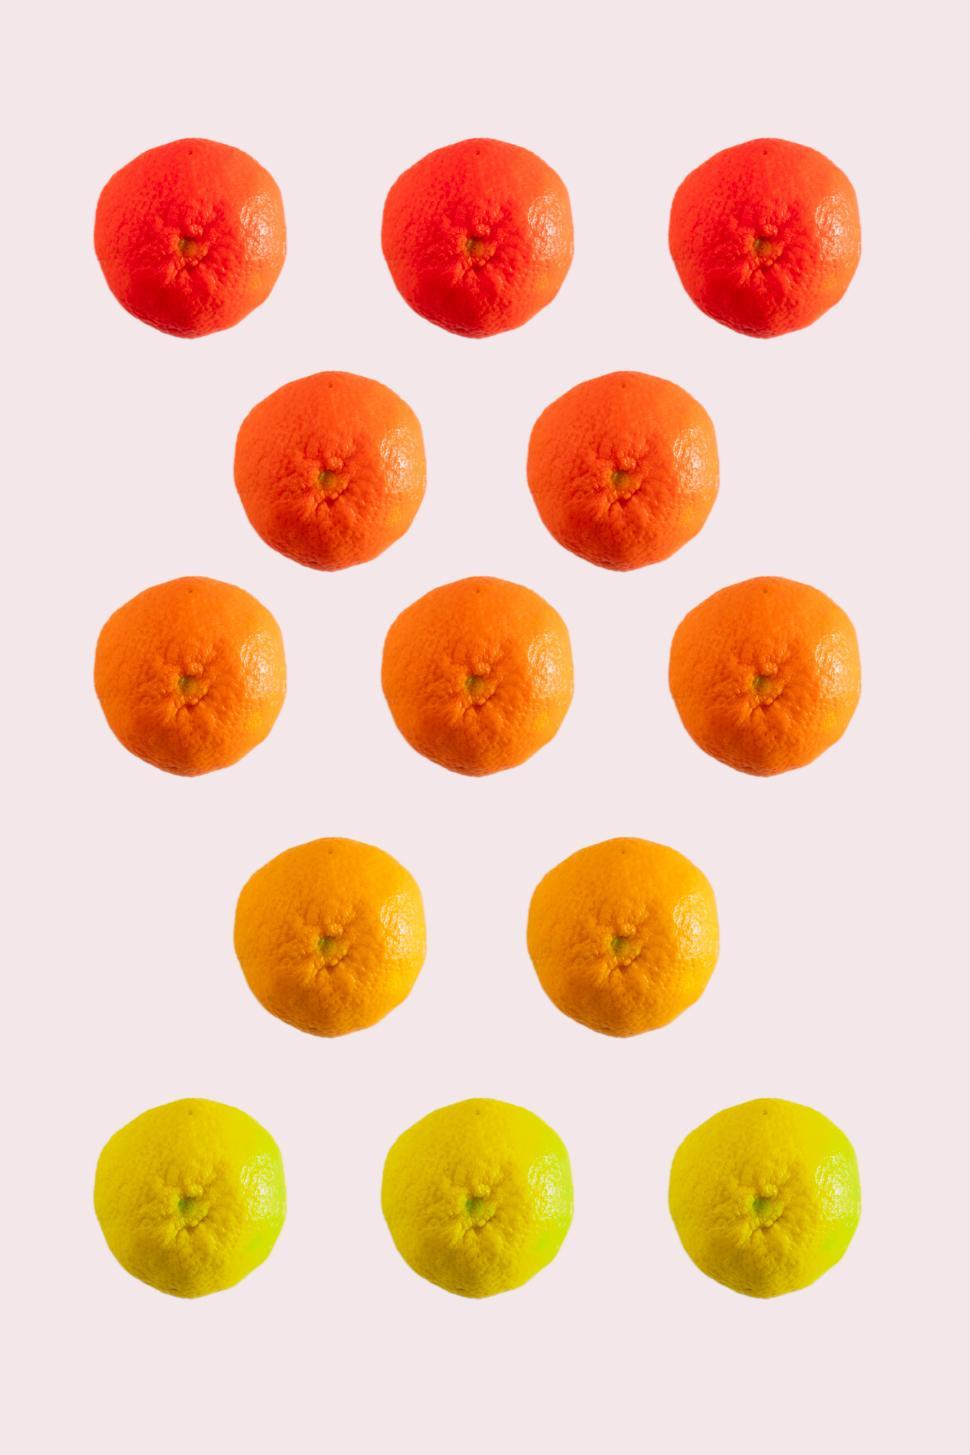 Free Image of modern lemon and oranges background 